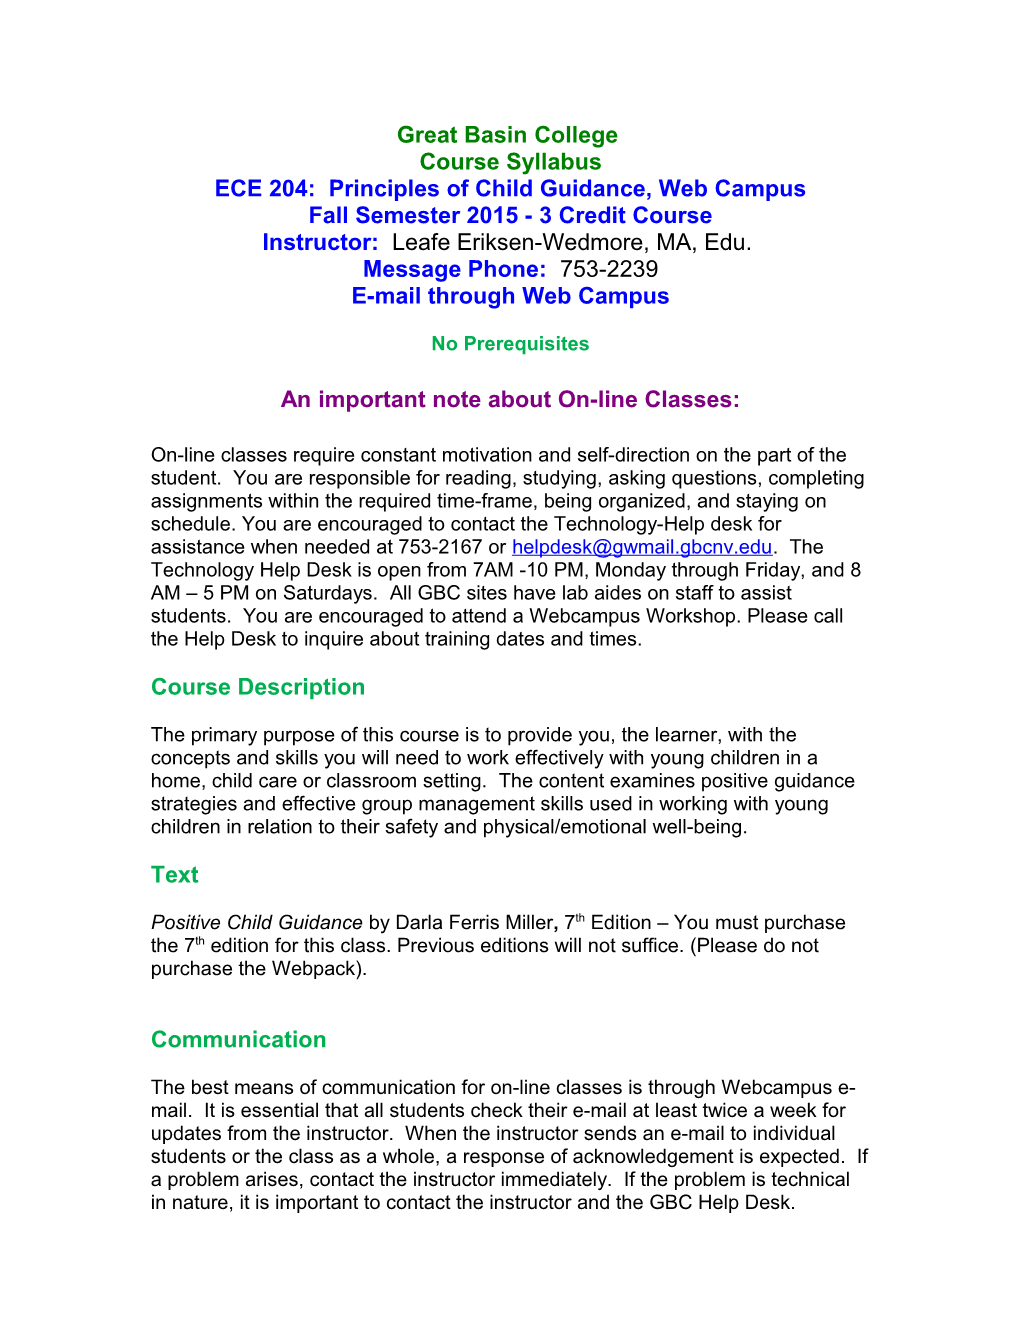 ECE 204: Principles of Child Guidance, Web Campus